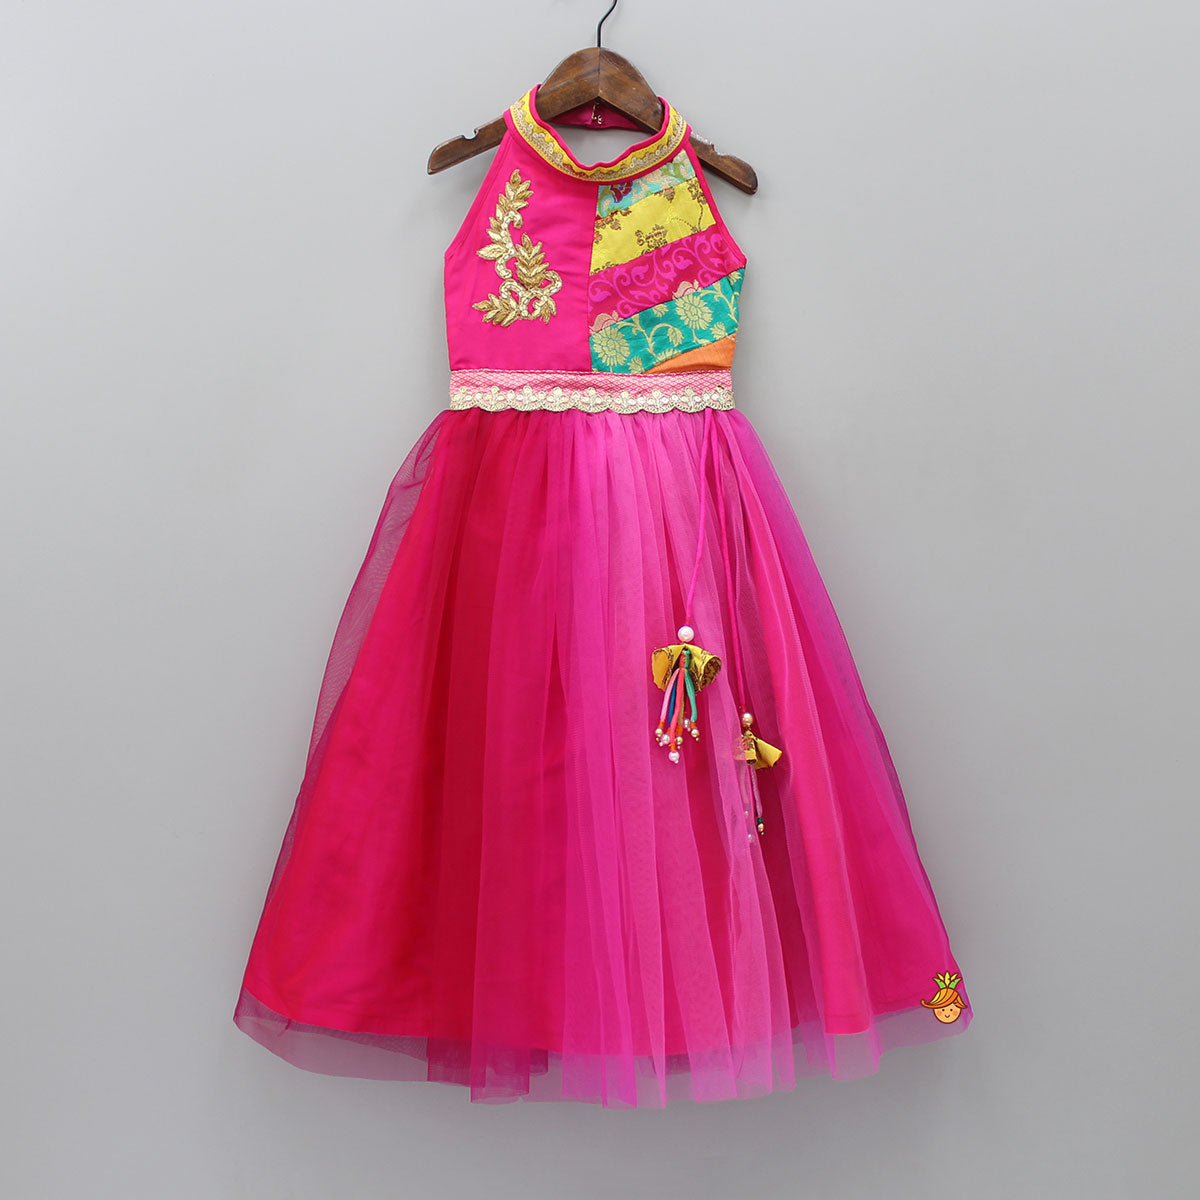 Little Muffet - Adorable Designer Wear Dresses For Your... | Facebook